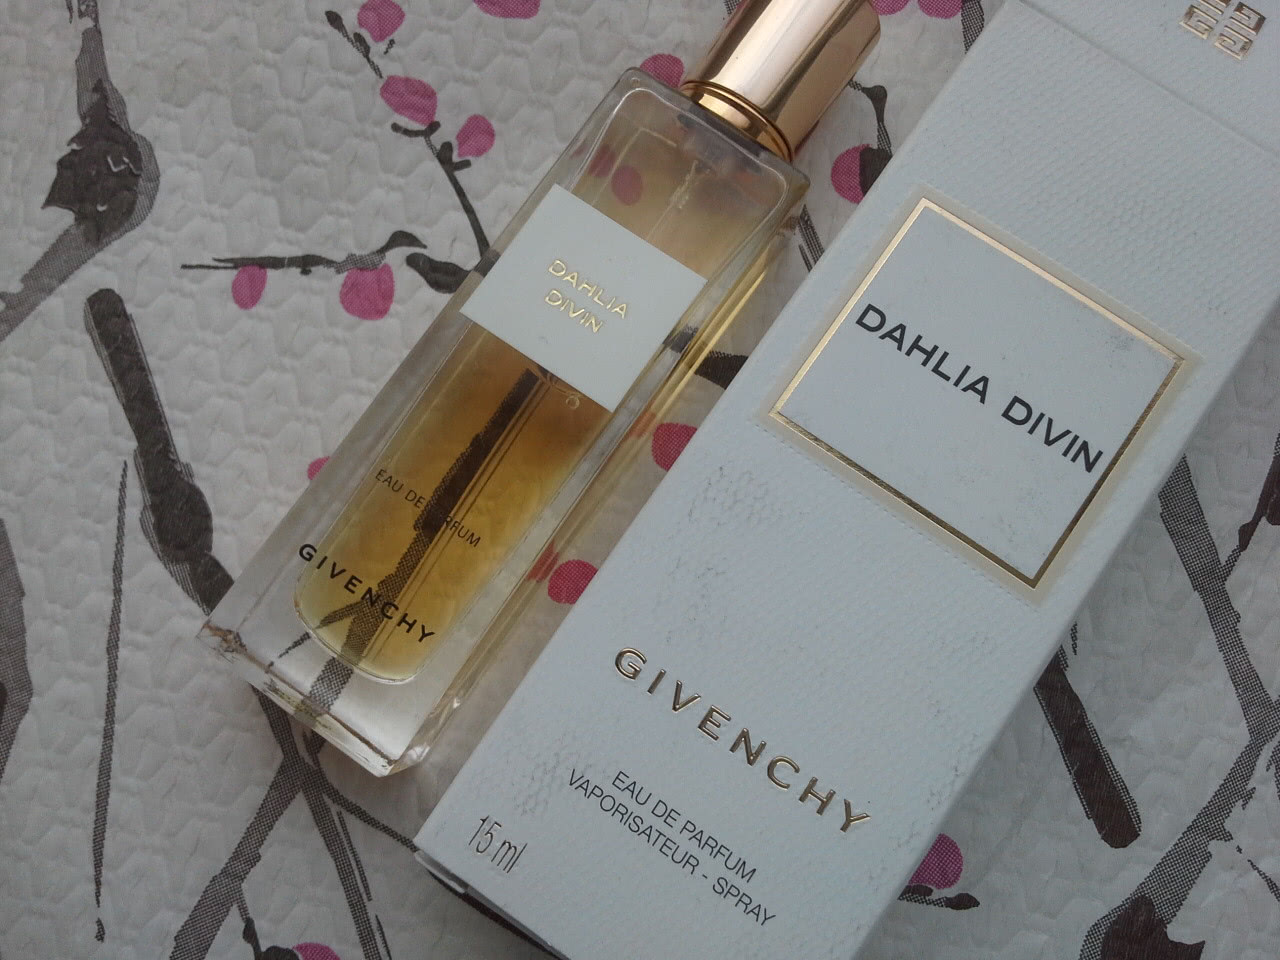 Givenchy Dahlia Divin edp, 15ml